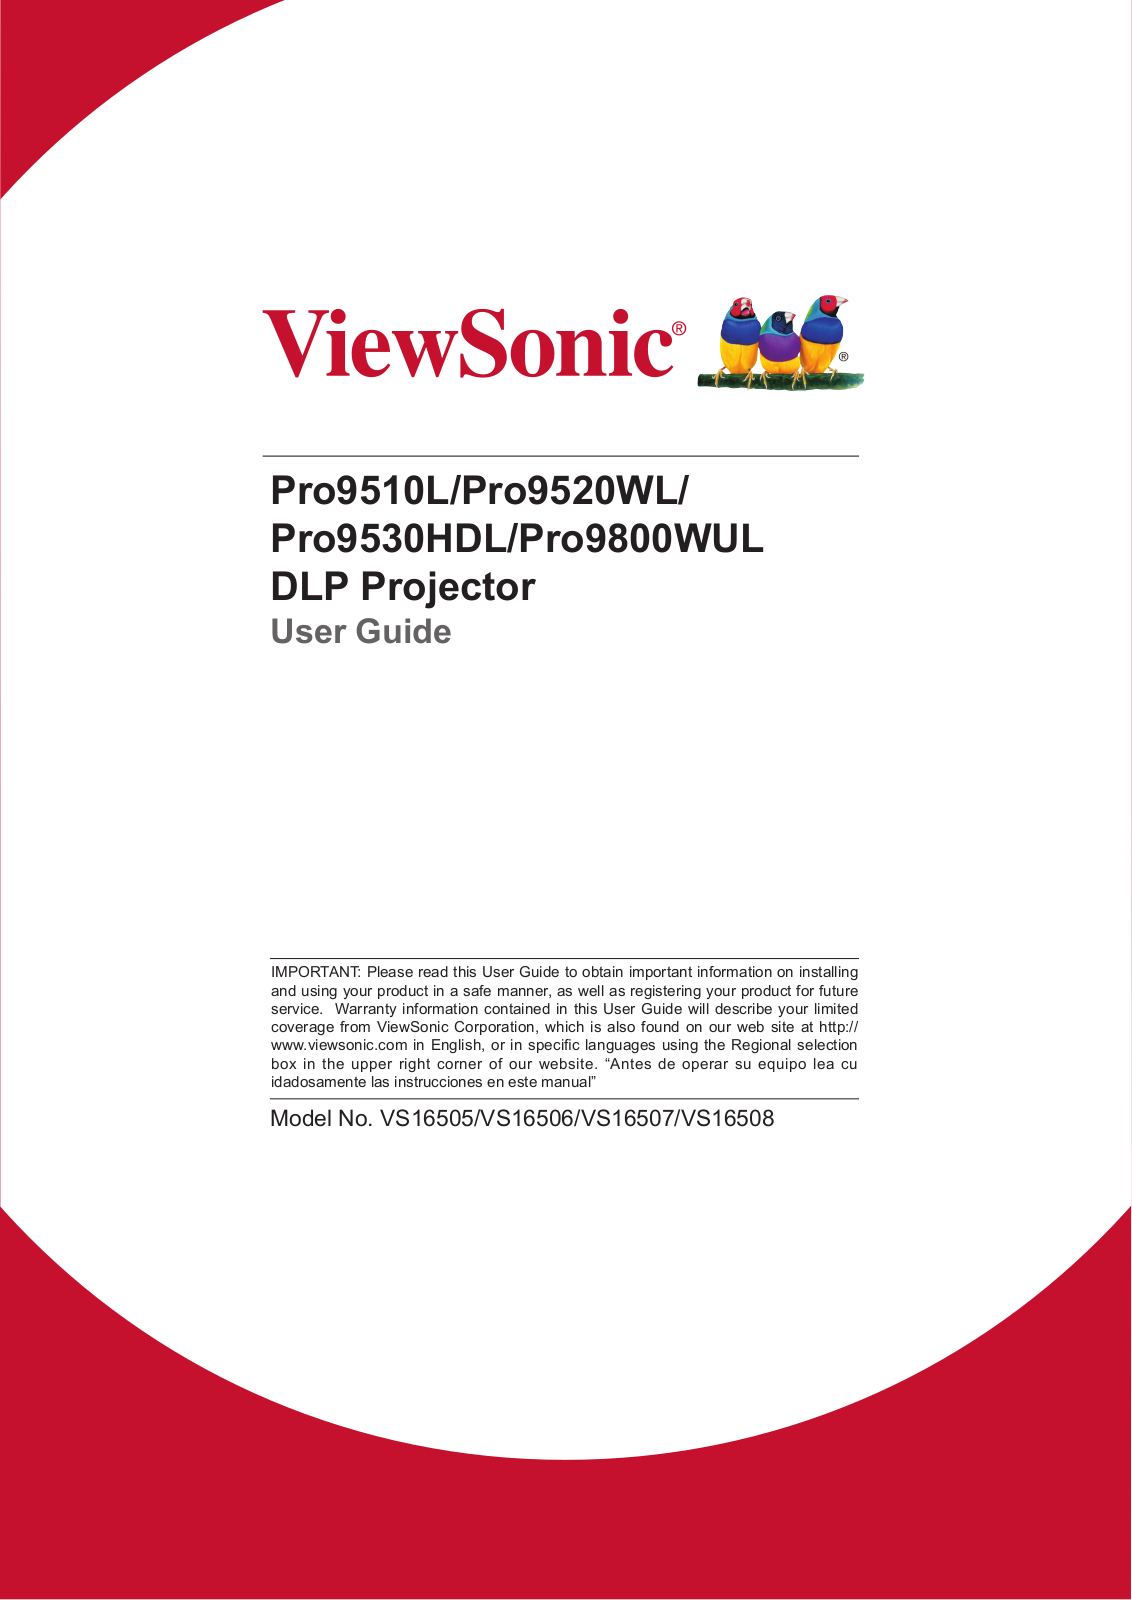 ViewSonic Pro9800WUL, Pro9520WL, Pro9510L User Manual